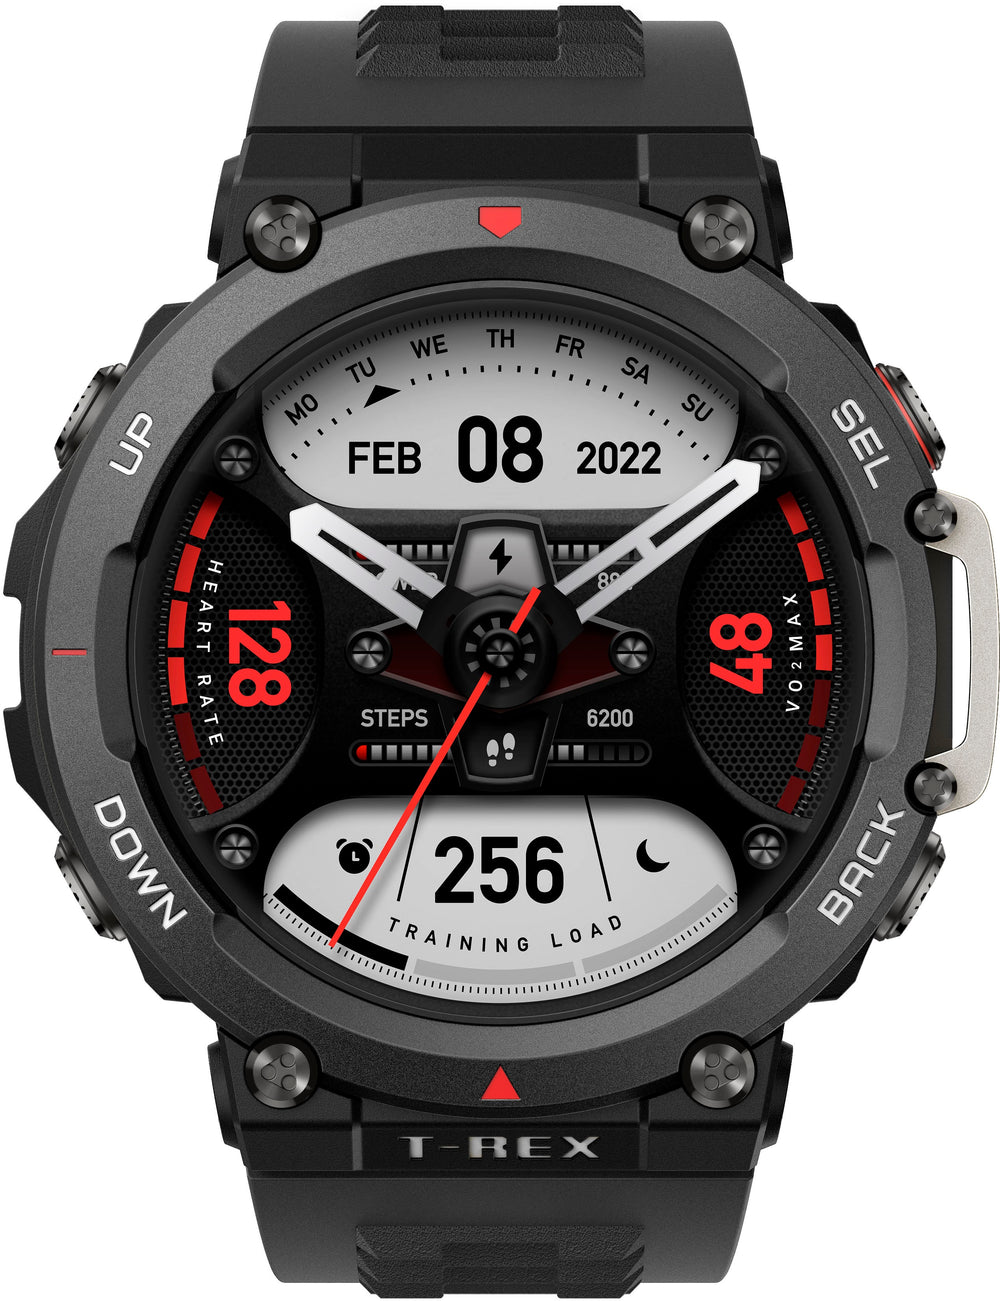 Amazfit - T-Rex 2 Outdoor Smartwatch 35.3 mm - Ember Black_1